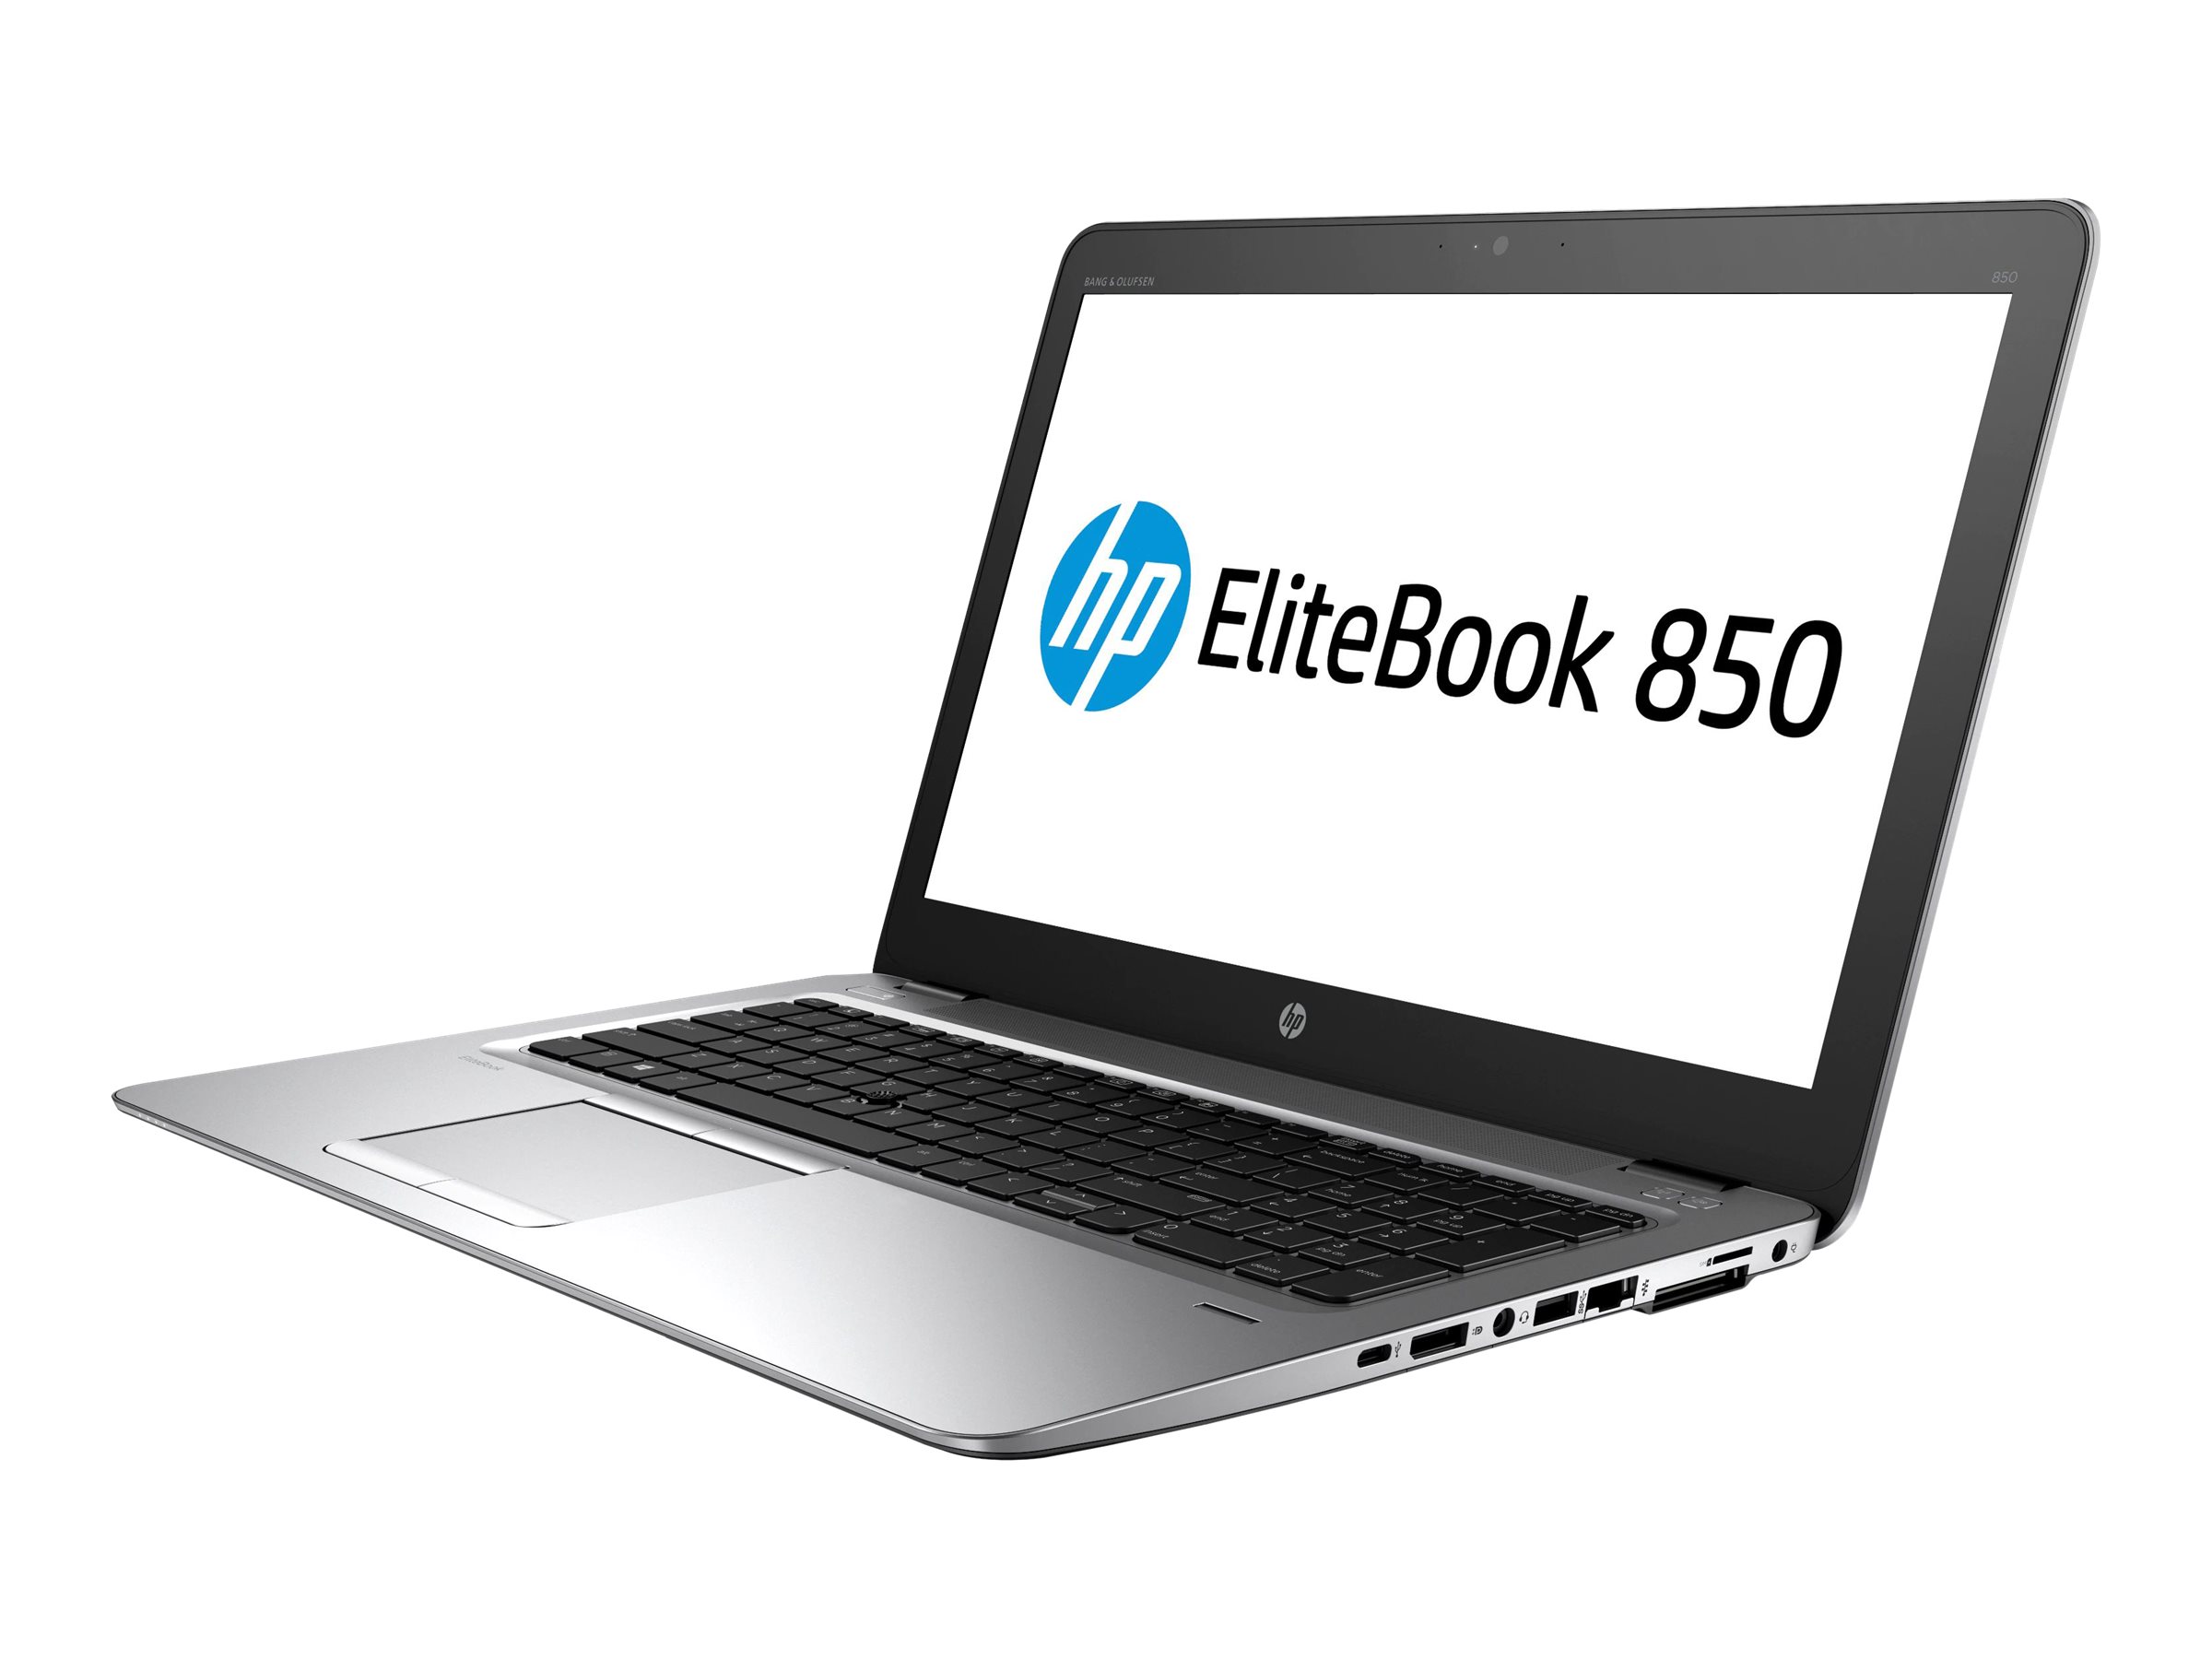 HP EliteBook 850 G3 - Core i7 6600U / 2.6 GHz